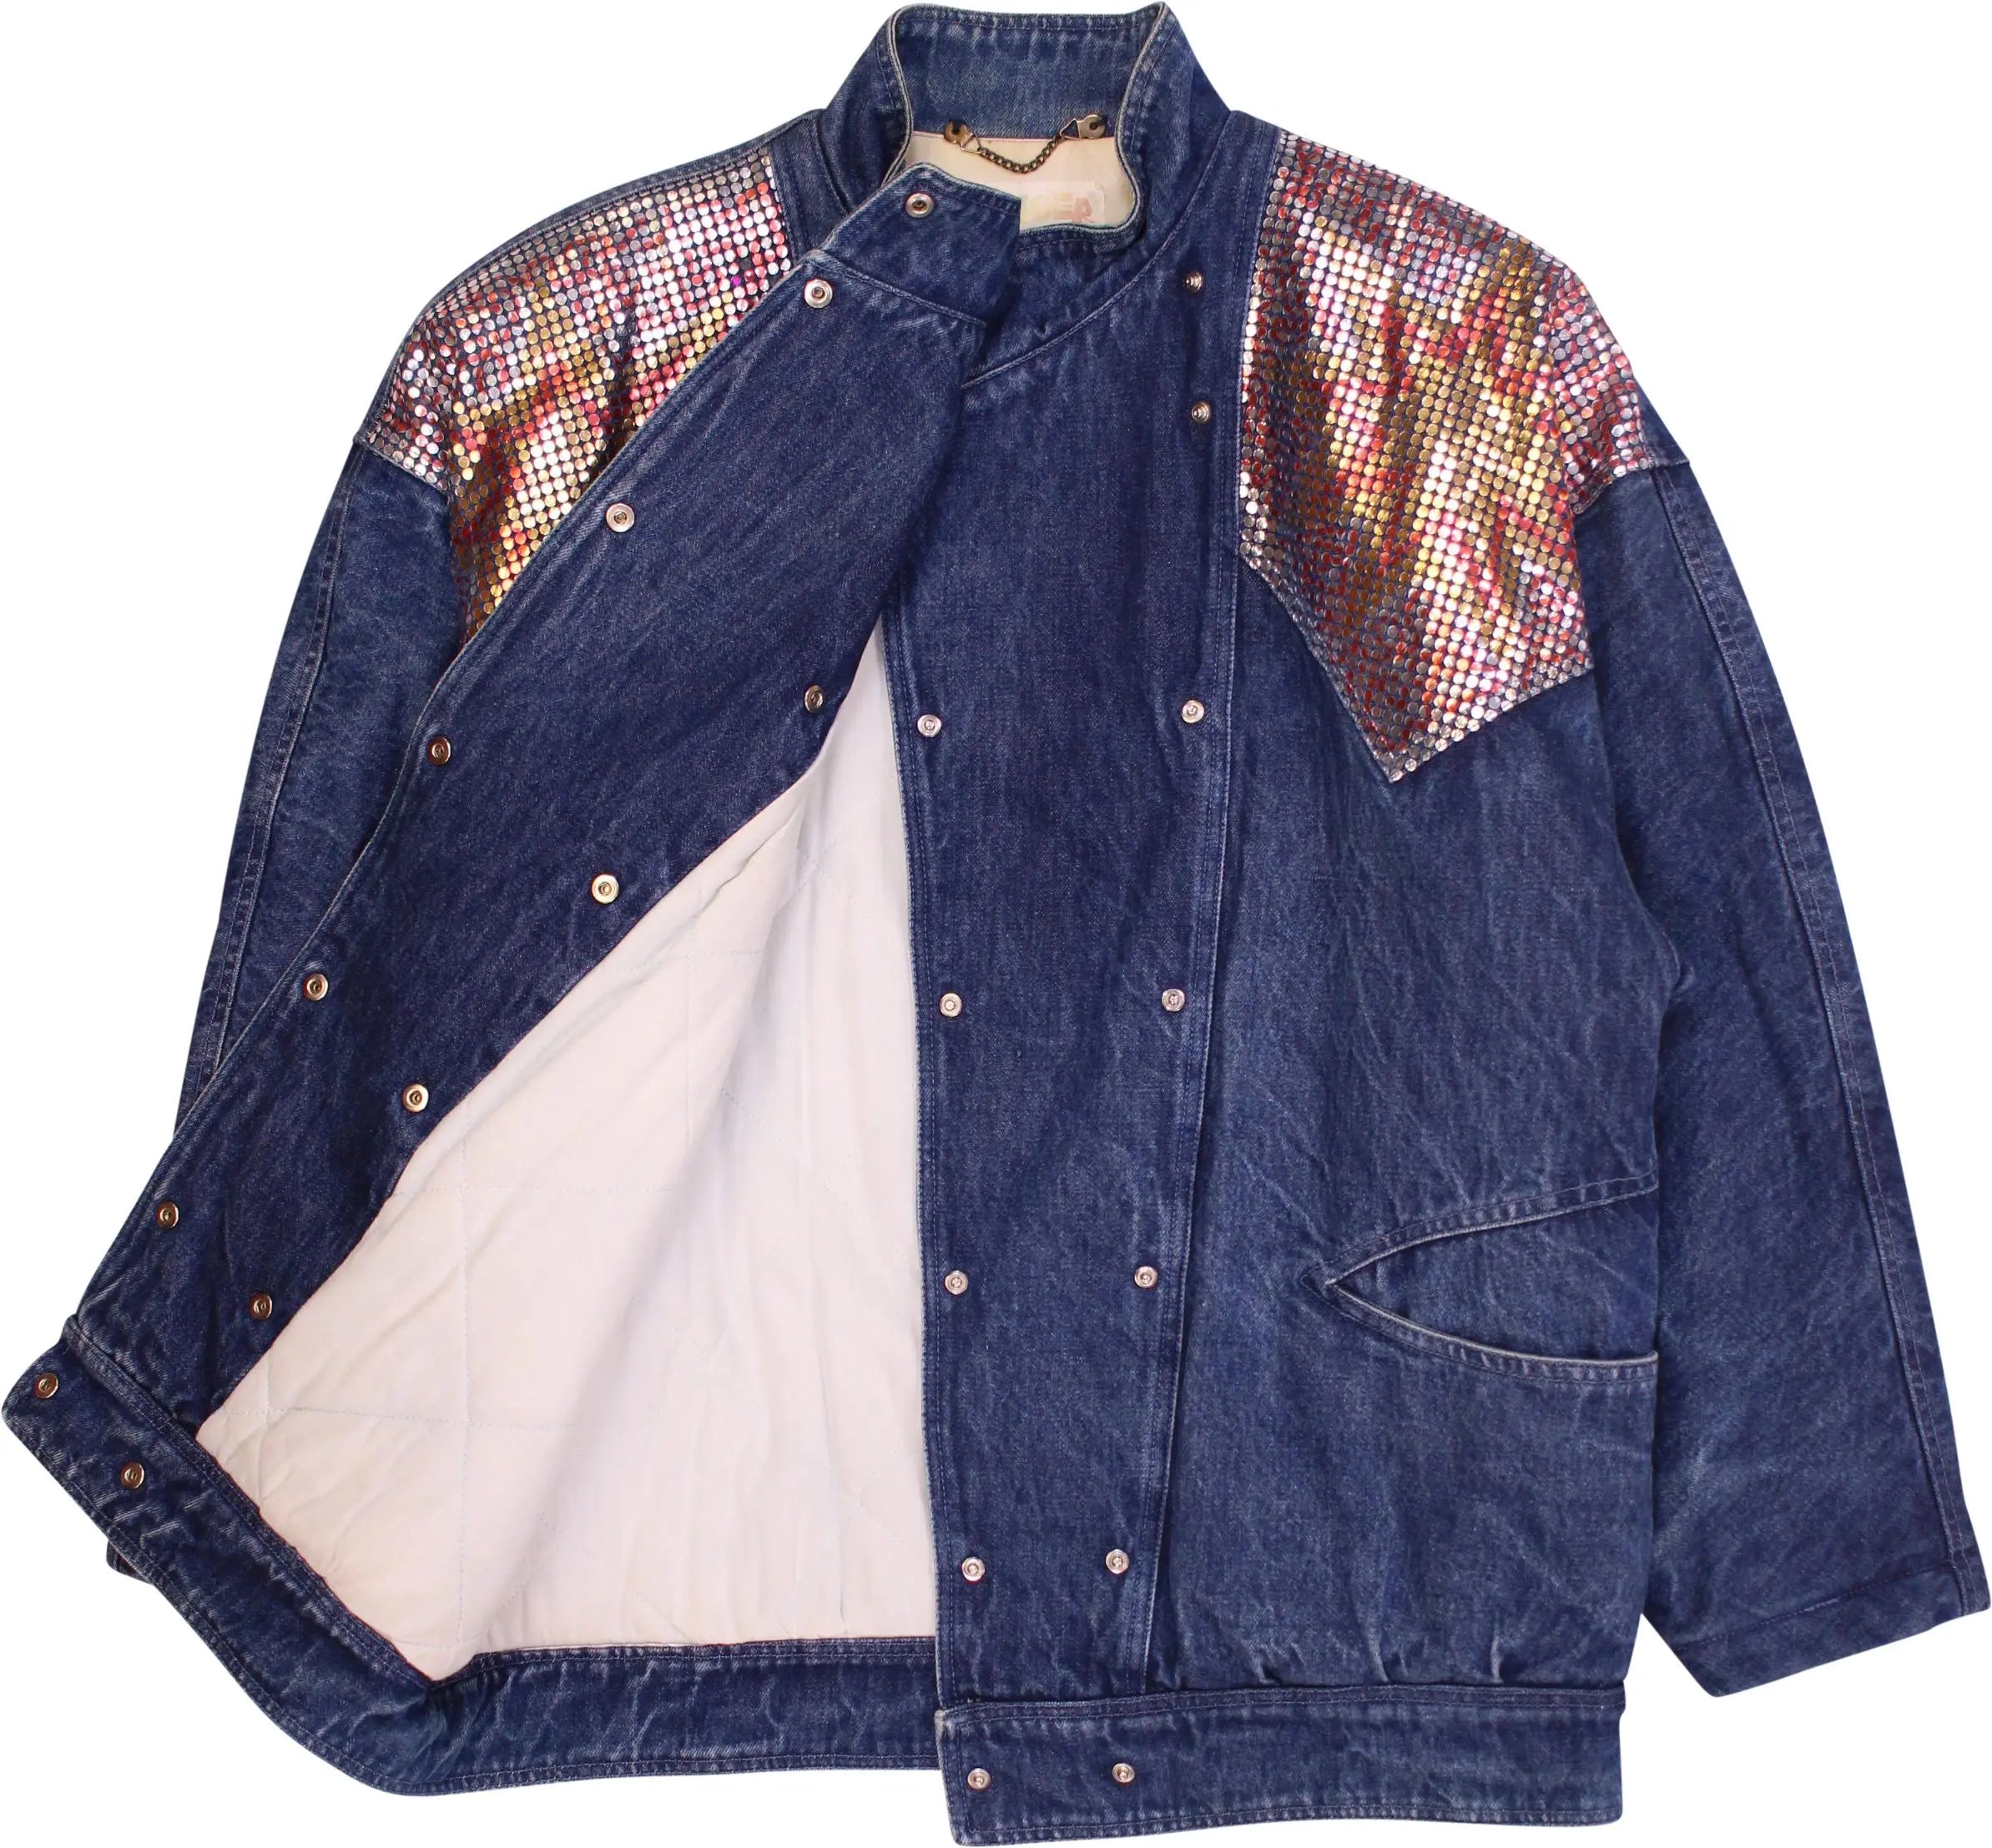 Swinger - 80s Denim Jacket with Stars of Glitter on Shoulder- ThriftTale.com - Vintage and second handclothing